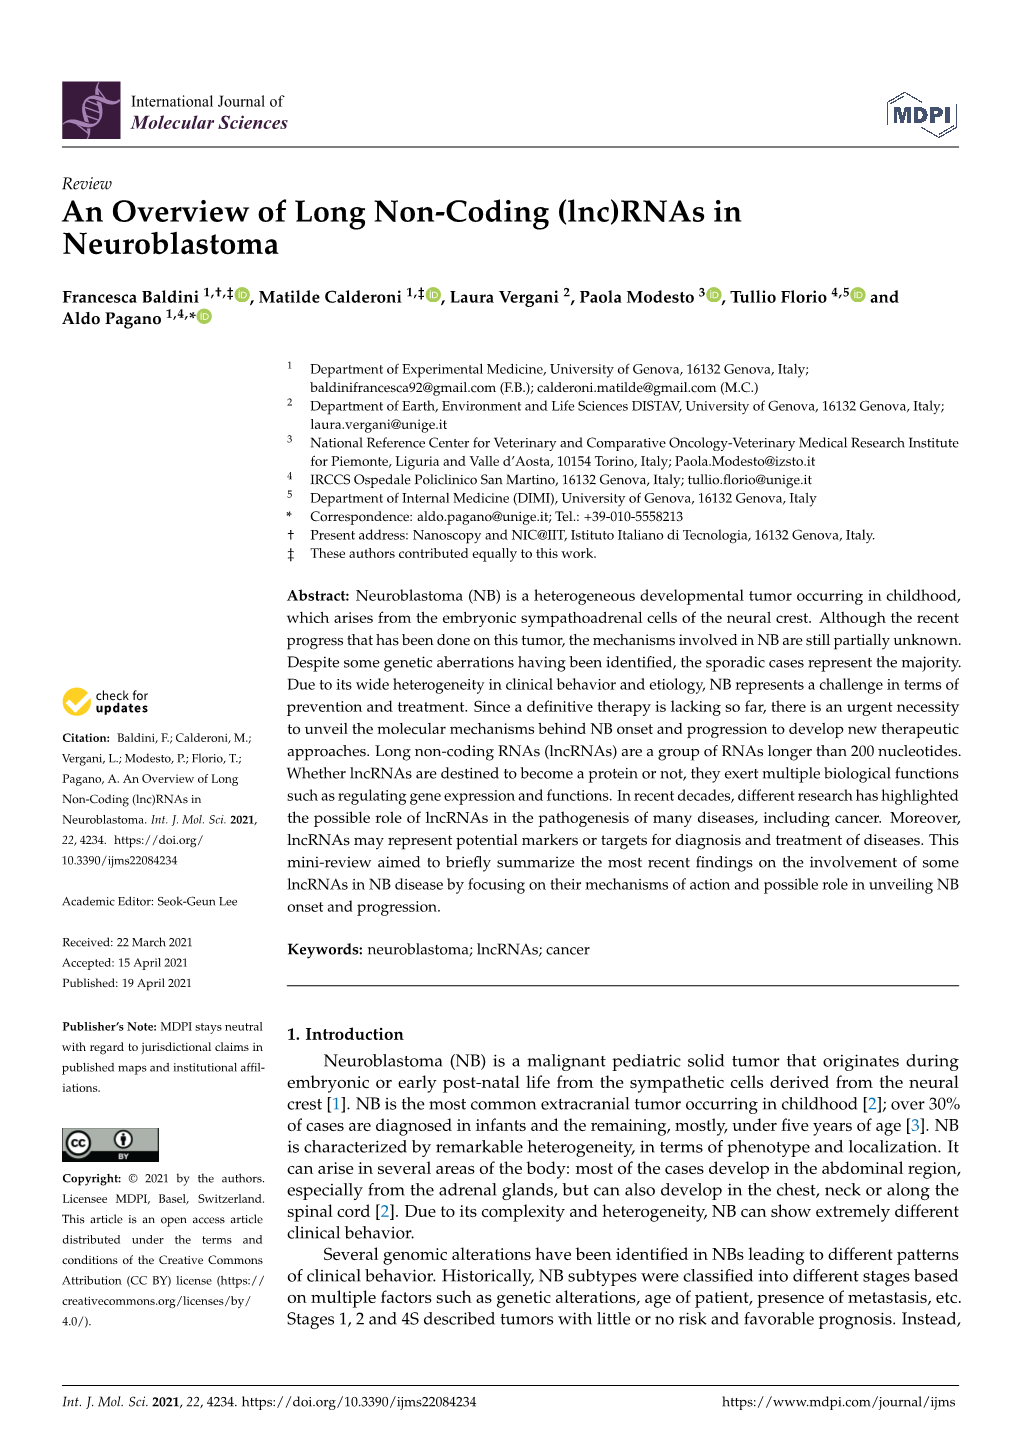 An Overview of Long Non-Coding (Lnc)Rnas in Neuroblastoma